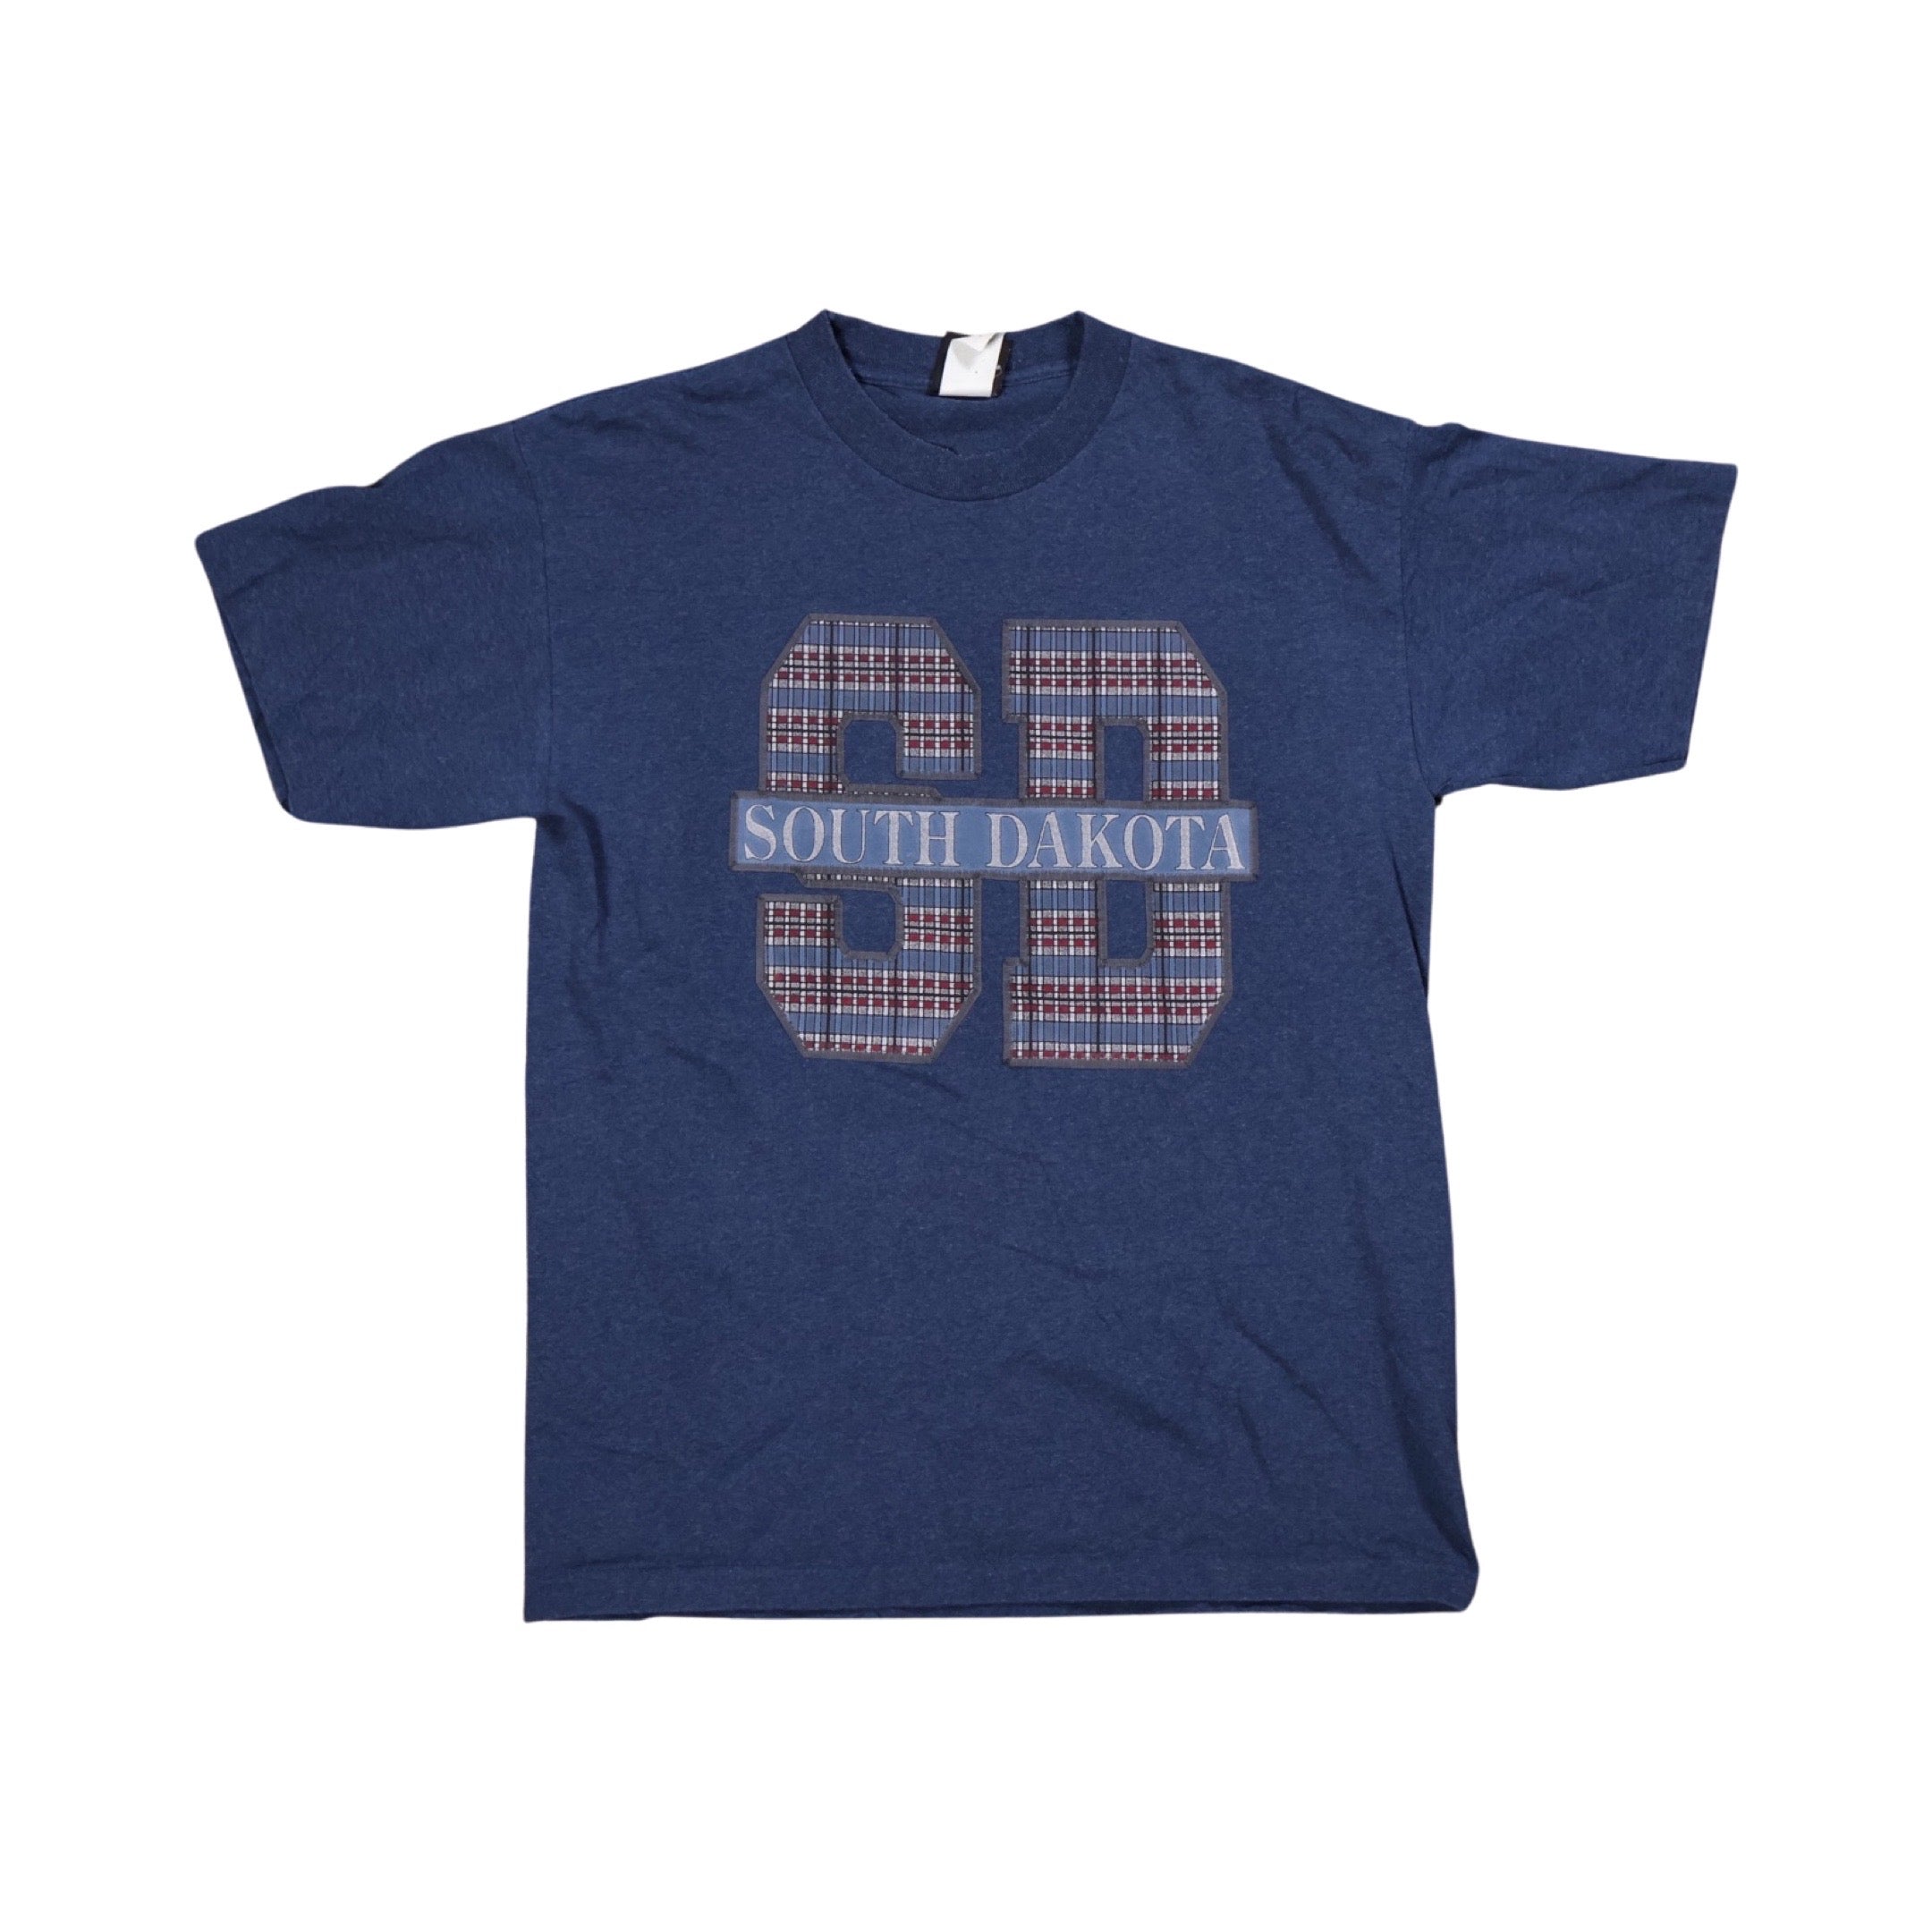 South Dakota 90s T-Shirt (Large)